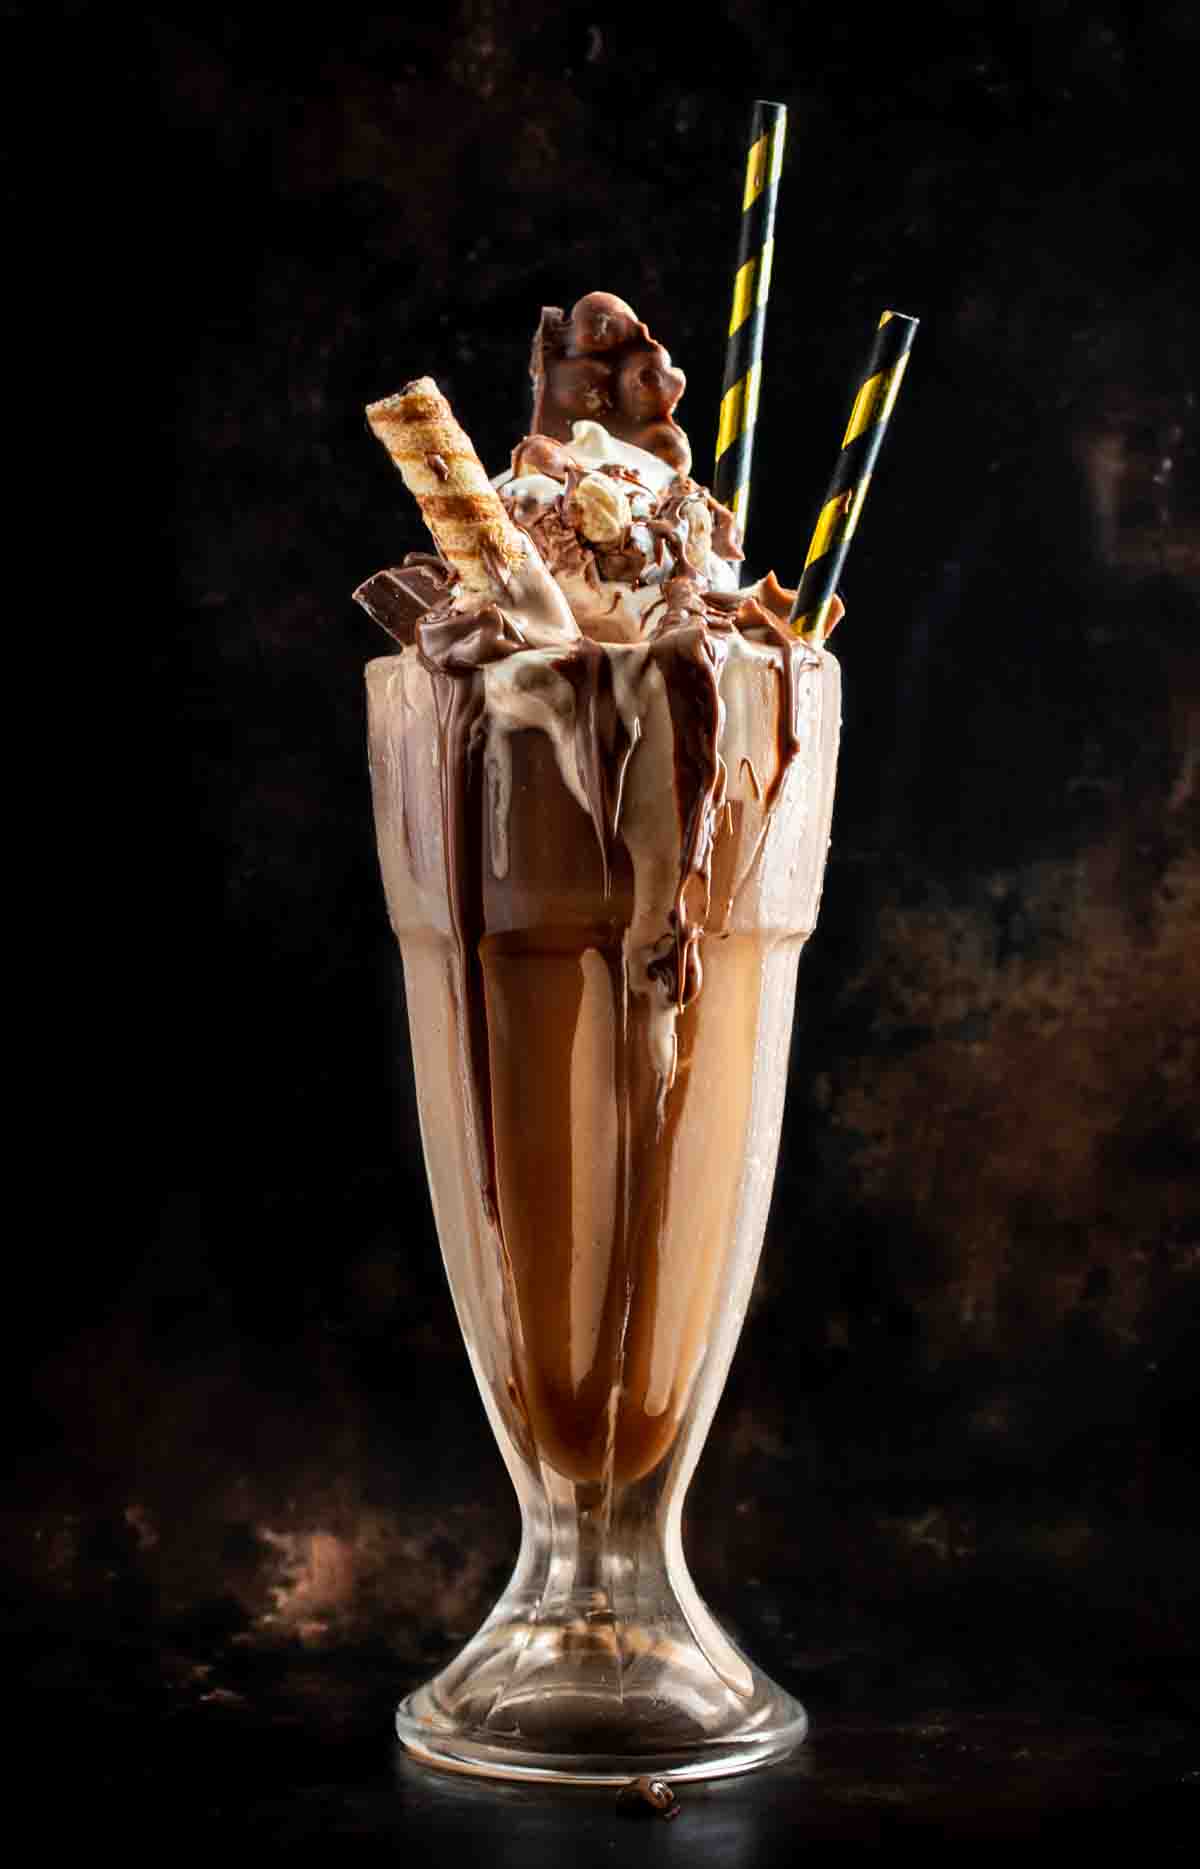 Nutella milkshake in a milkshake glass on a dark background.